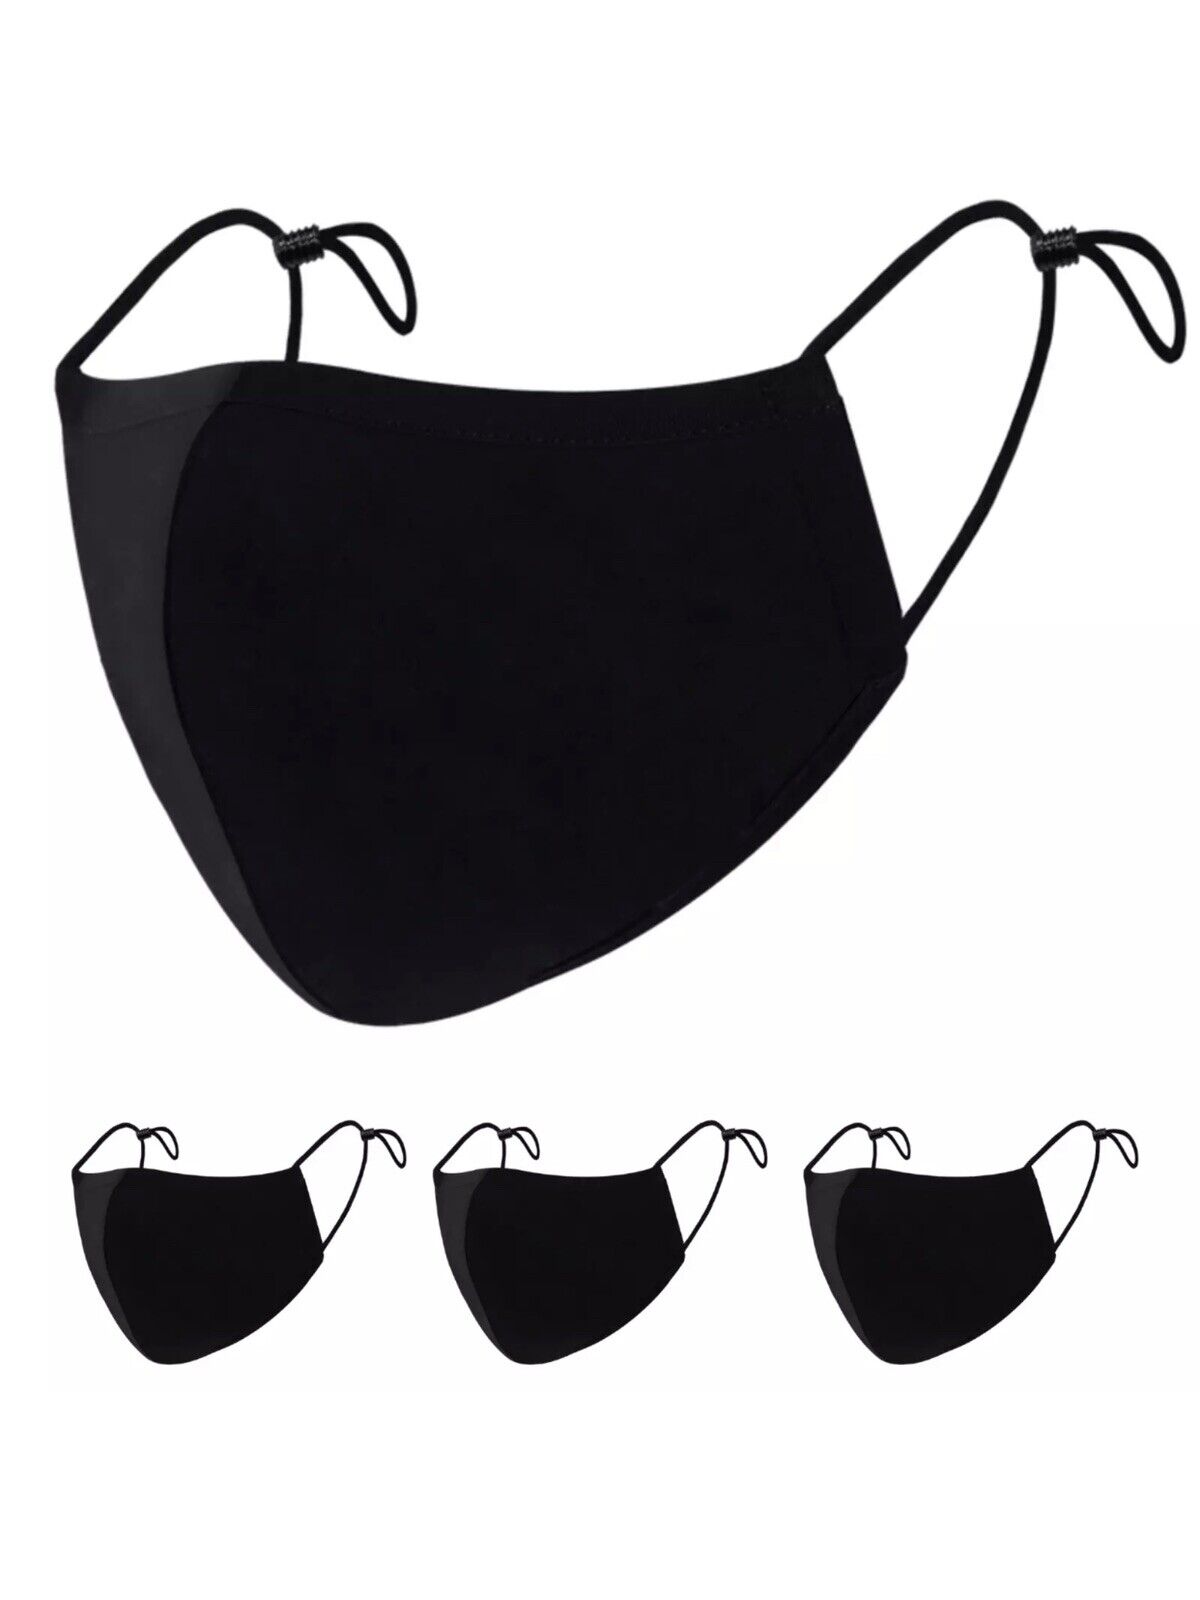 6 Face Masks Black Cotton Adult Mask Adjustable Elastic Loops Washable Reusable Unbranded - фотография #2